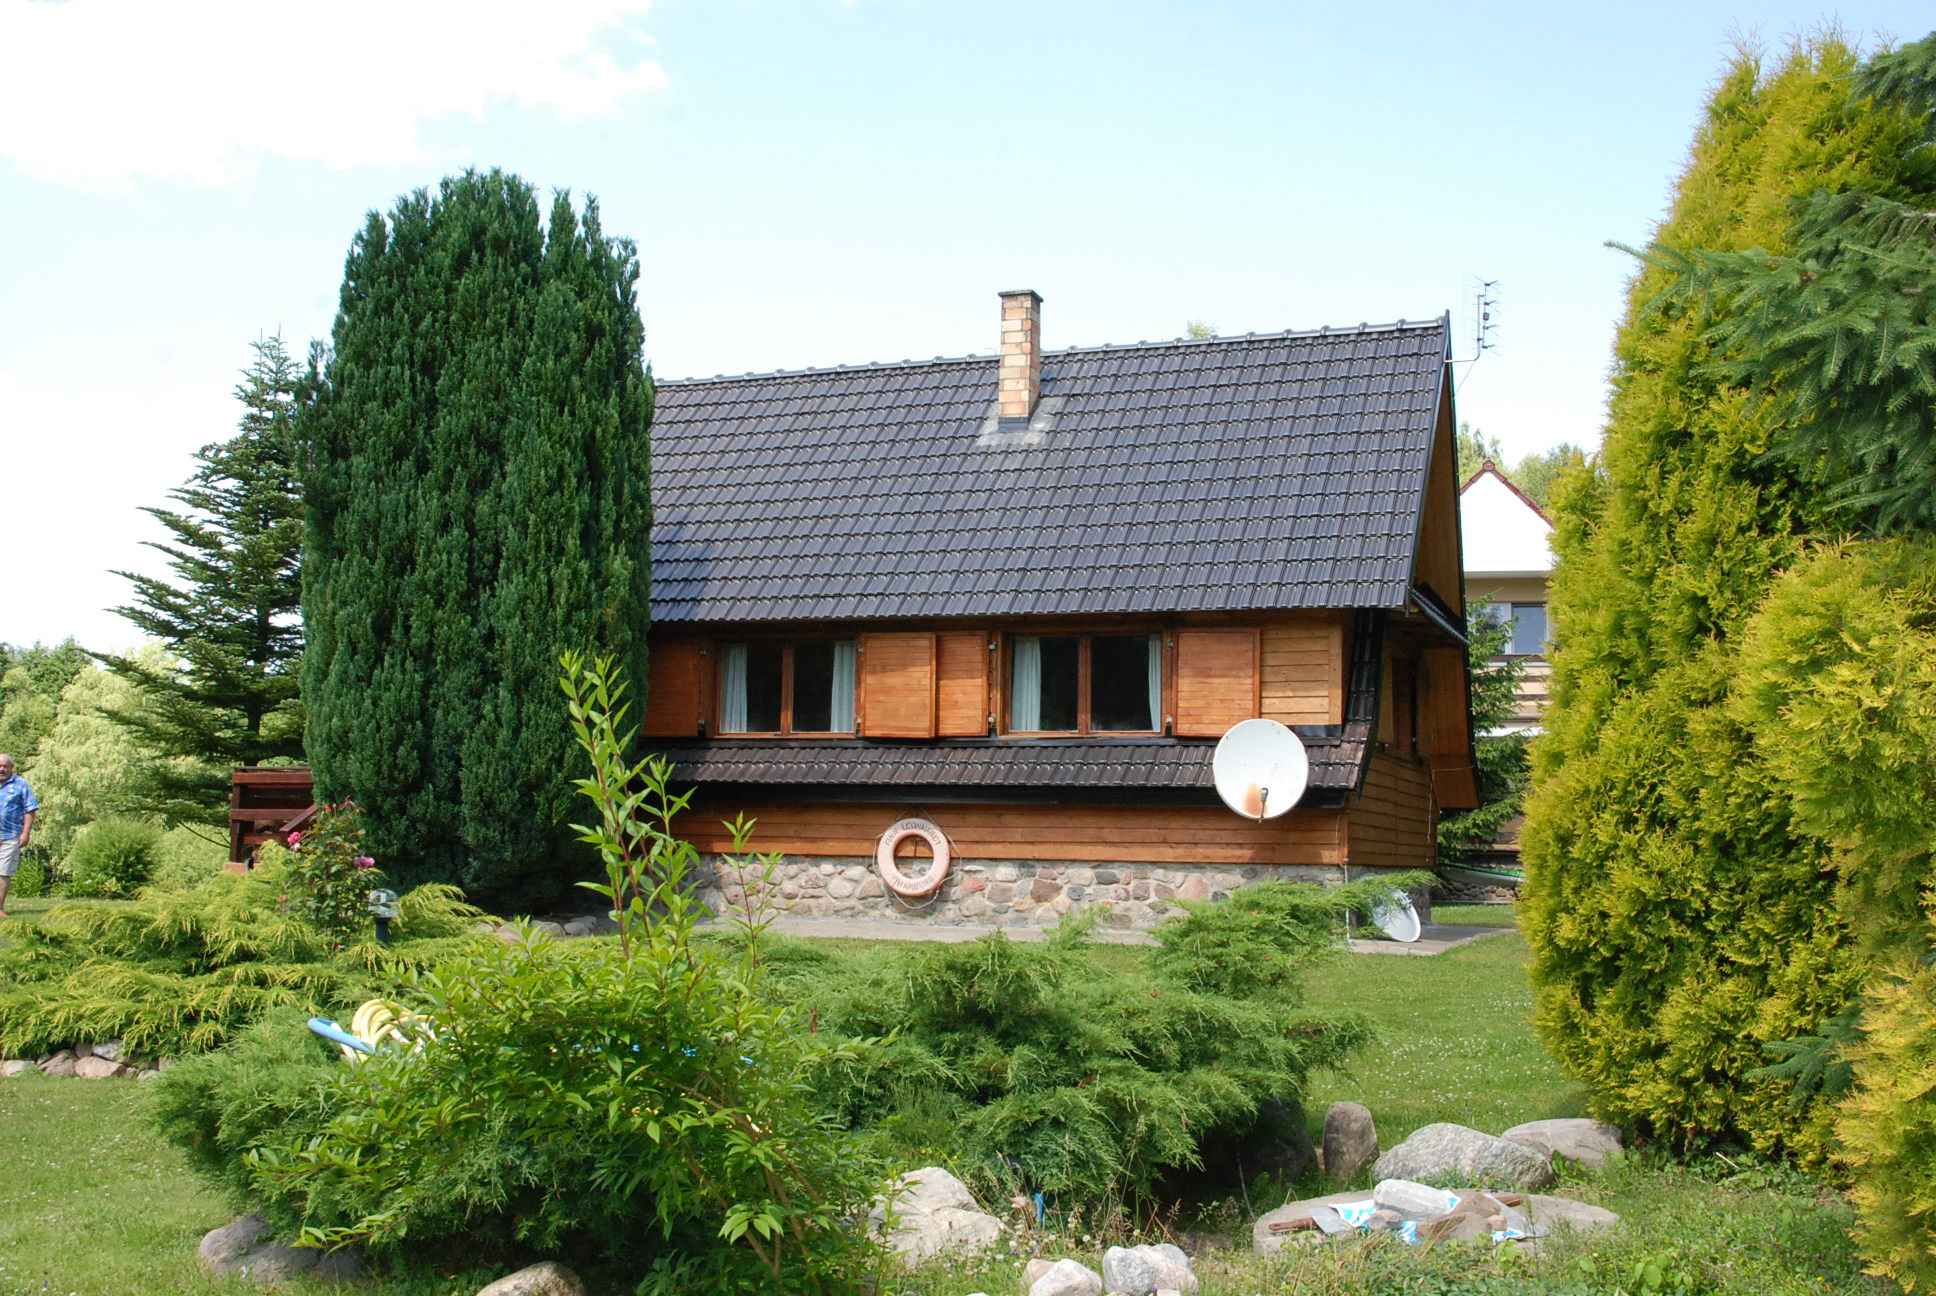 Ińsko 2 domy- Nörenberg Grundstück 2 Häuser. Ińsko - zdjęcie 6